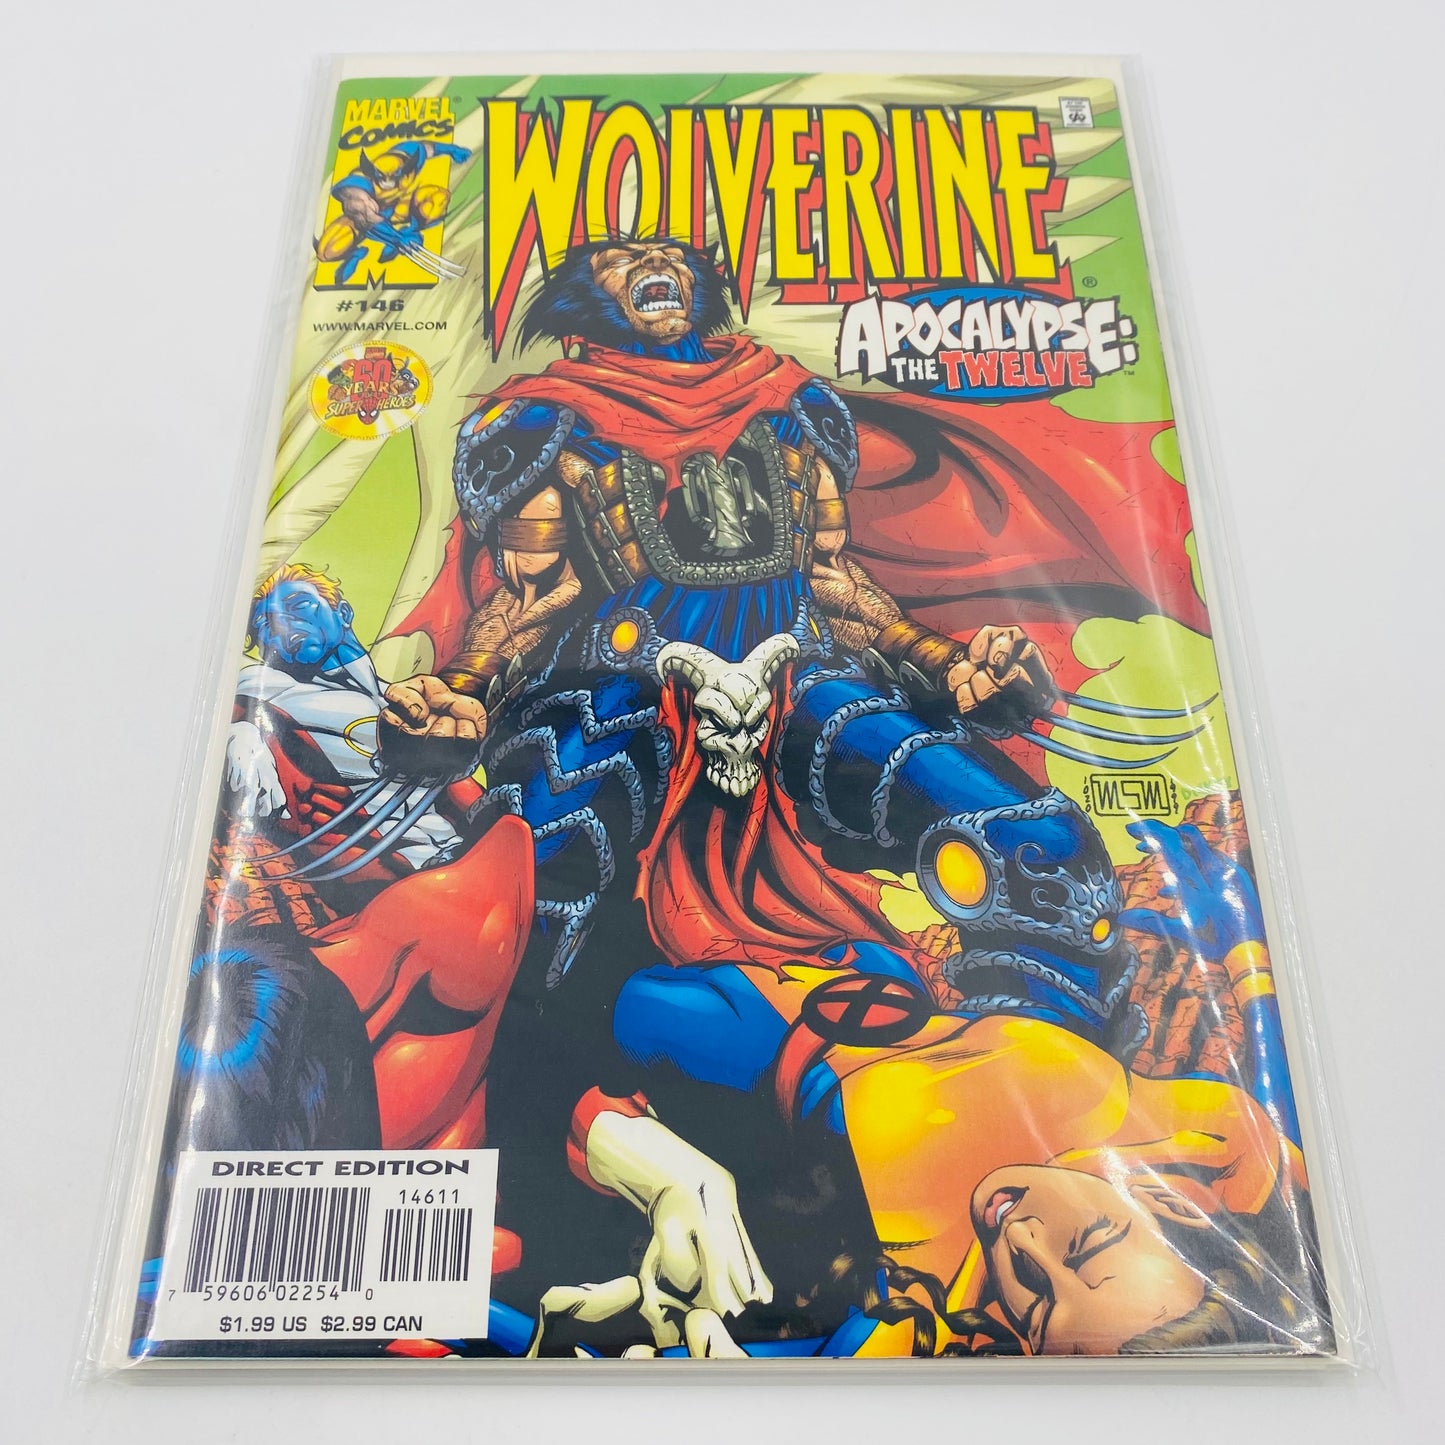 Wolverine #146-147 “Through a Dark Tunnel” & “Into the Light” (1999-2000) Marvel